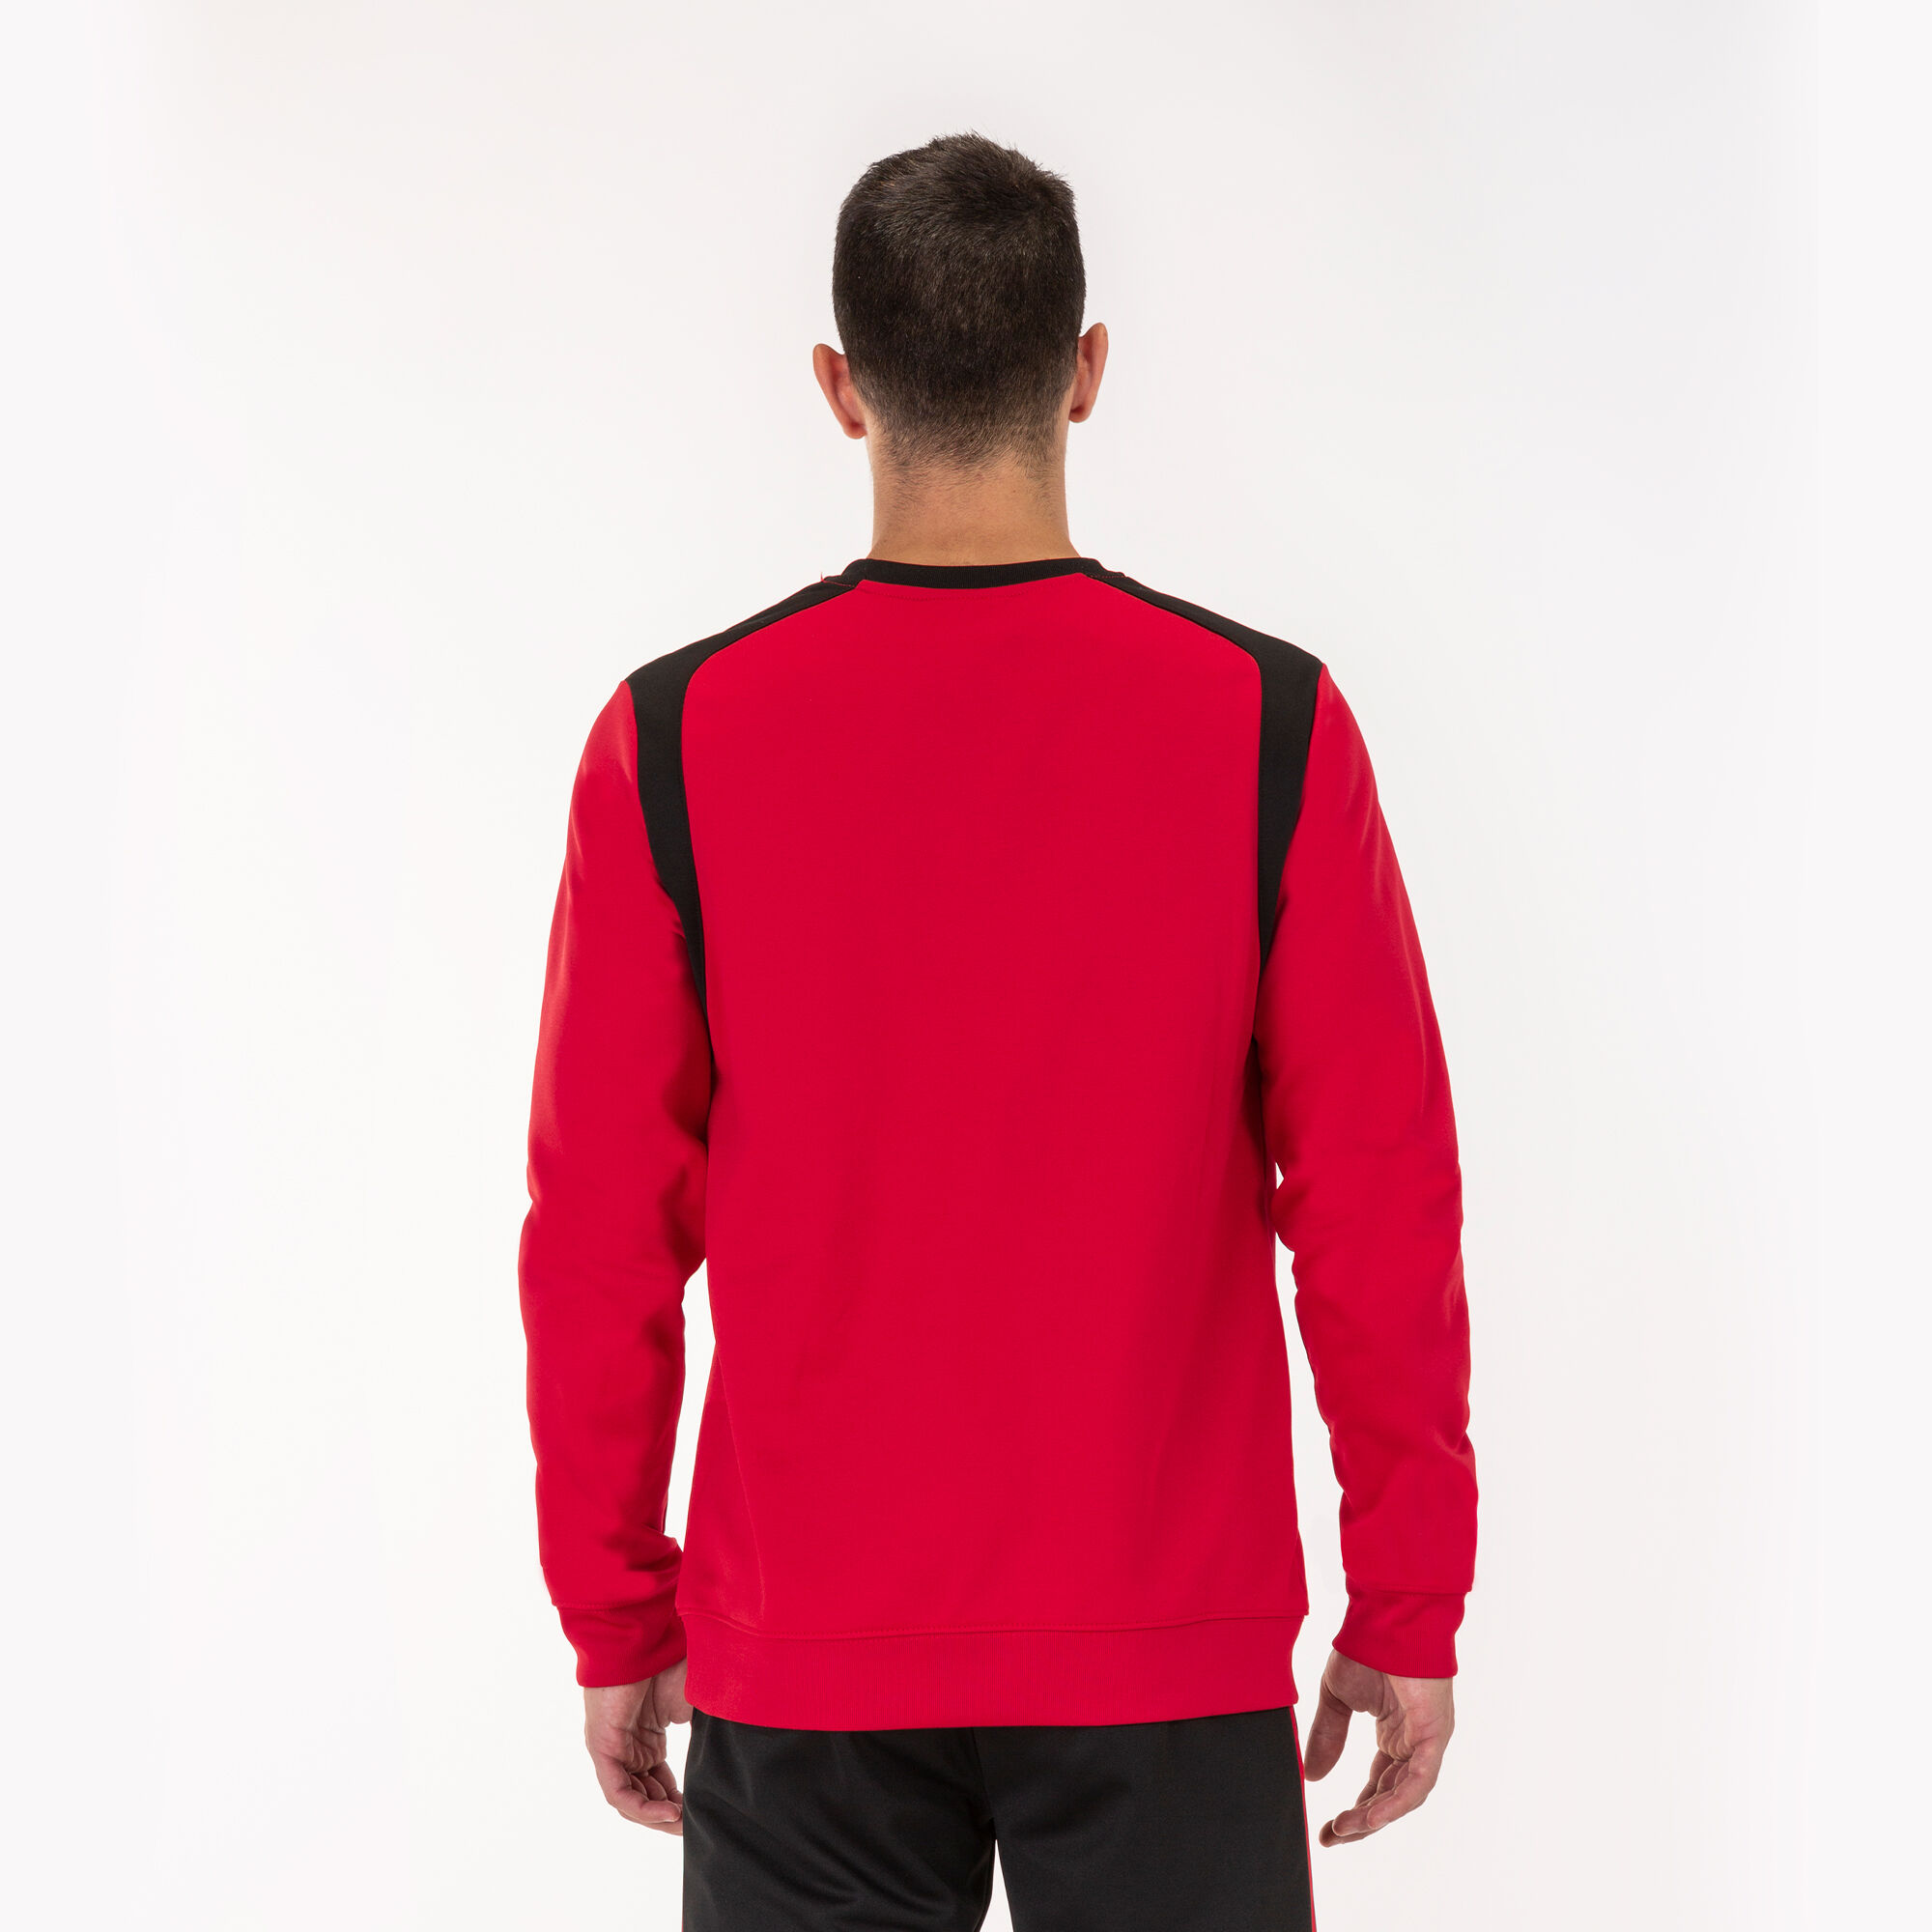 Sweat-shirt homme Championship V rouge noir